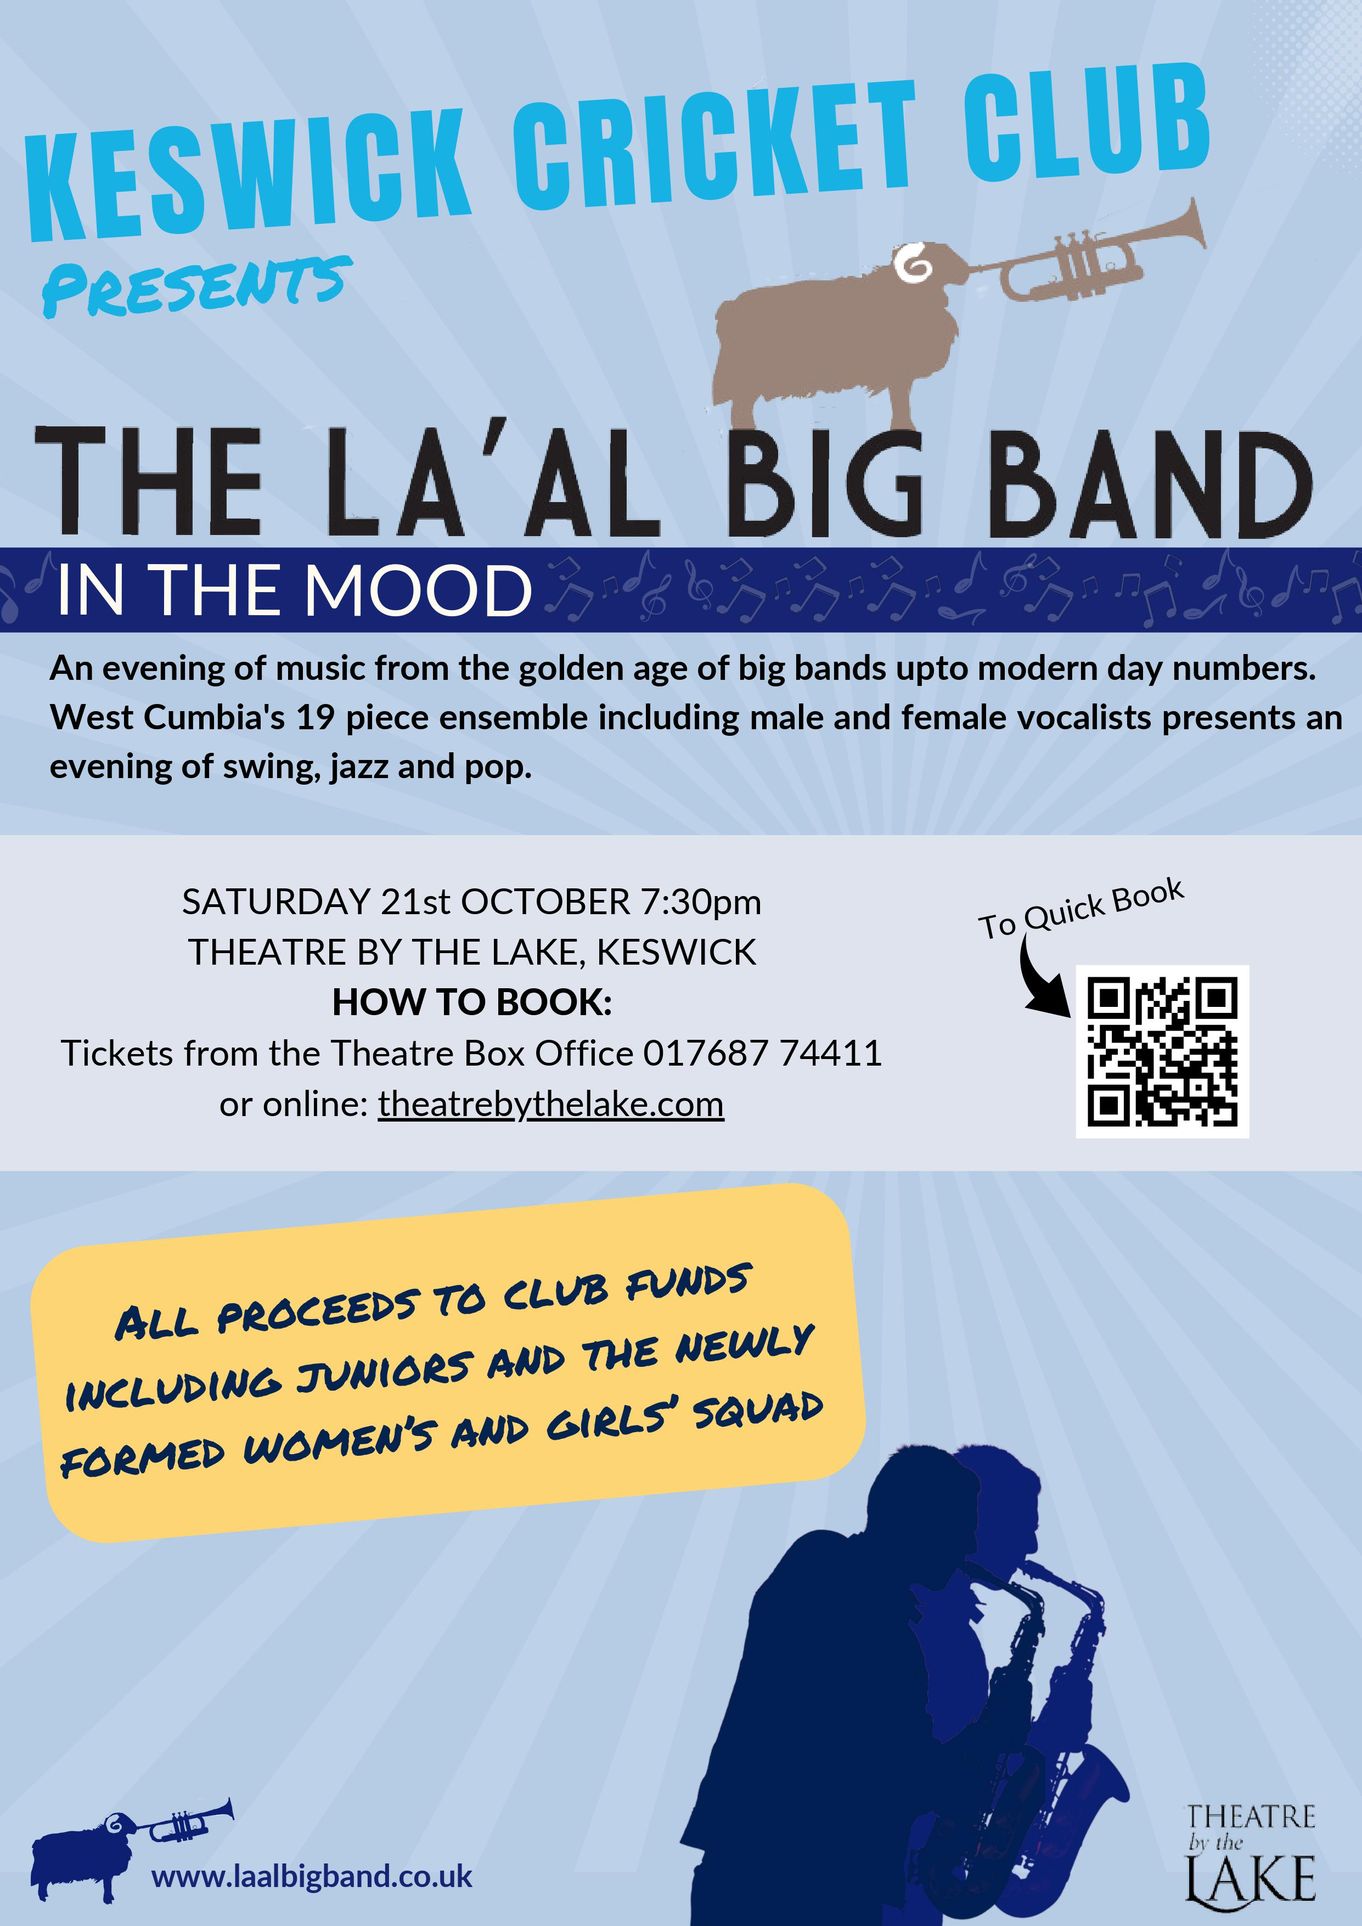 Keswick Cricket Club Presents The La'al Big Band: In The Mood